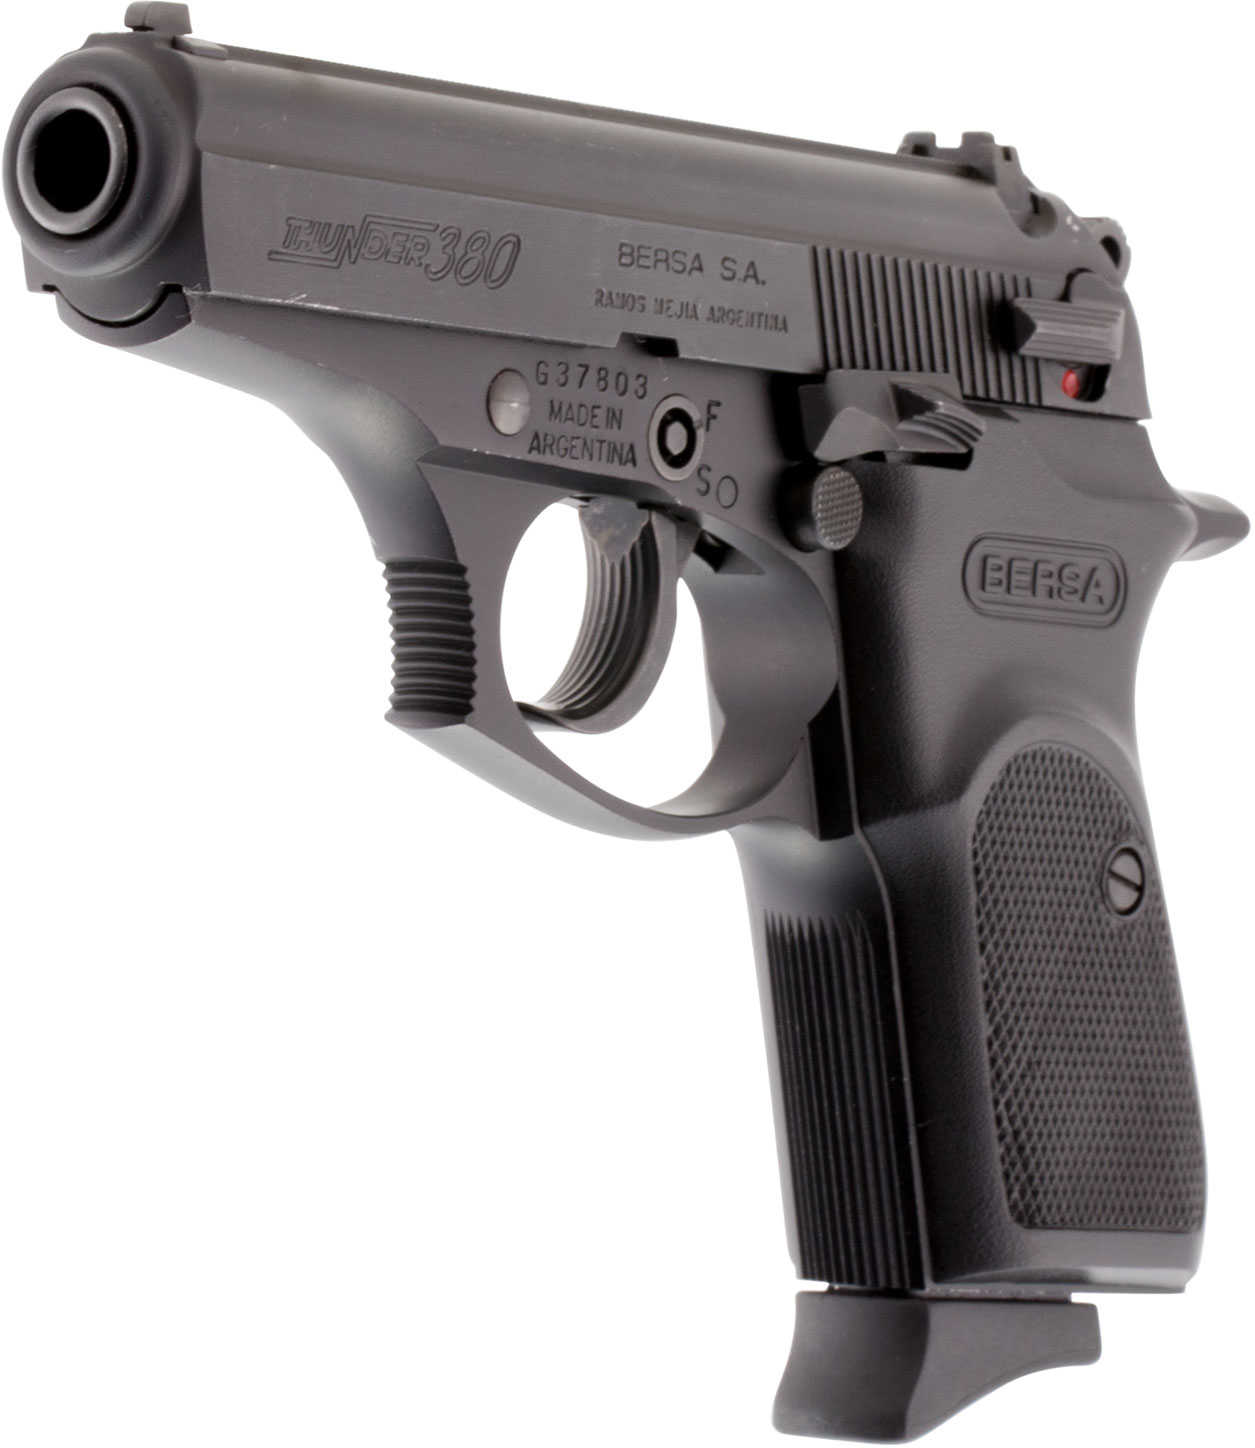 Bersa Thunder Semi Automatic Pistol 380 ACP 7 Round Hard Rubber Grip 3 Dot Fixed Sight With Matte Black Finish T380M8